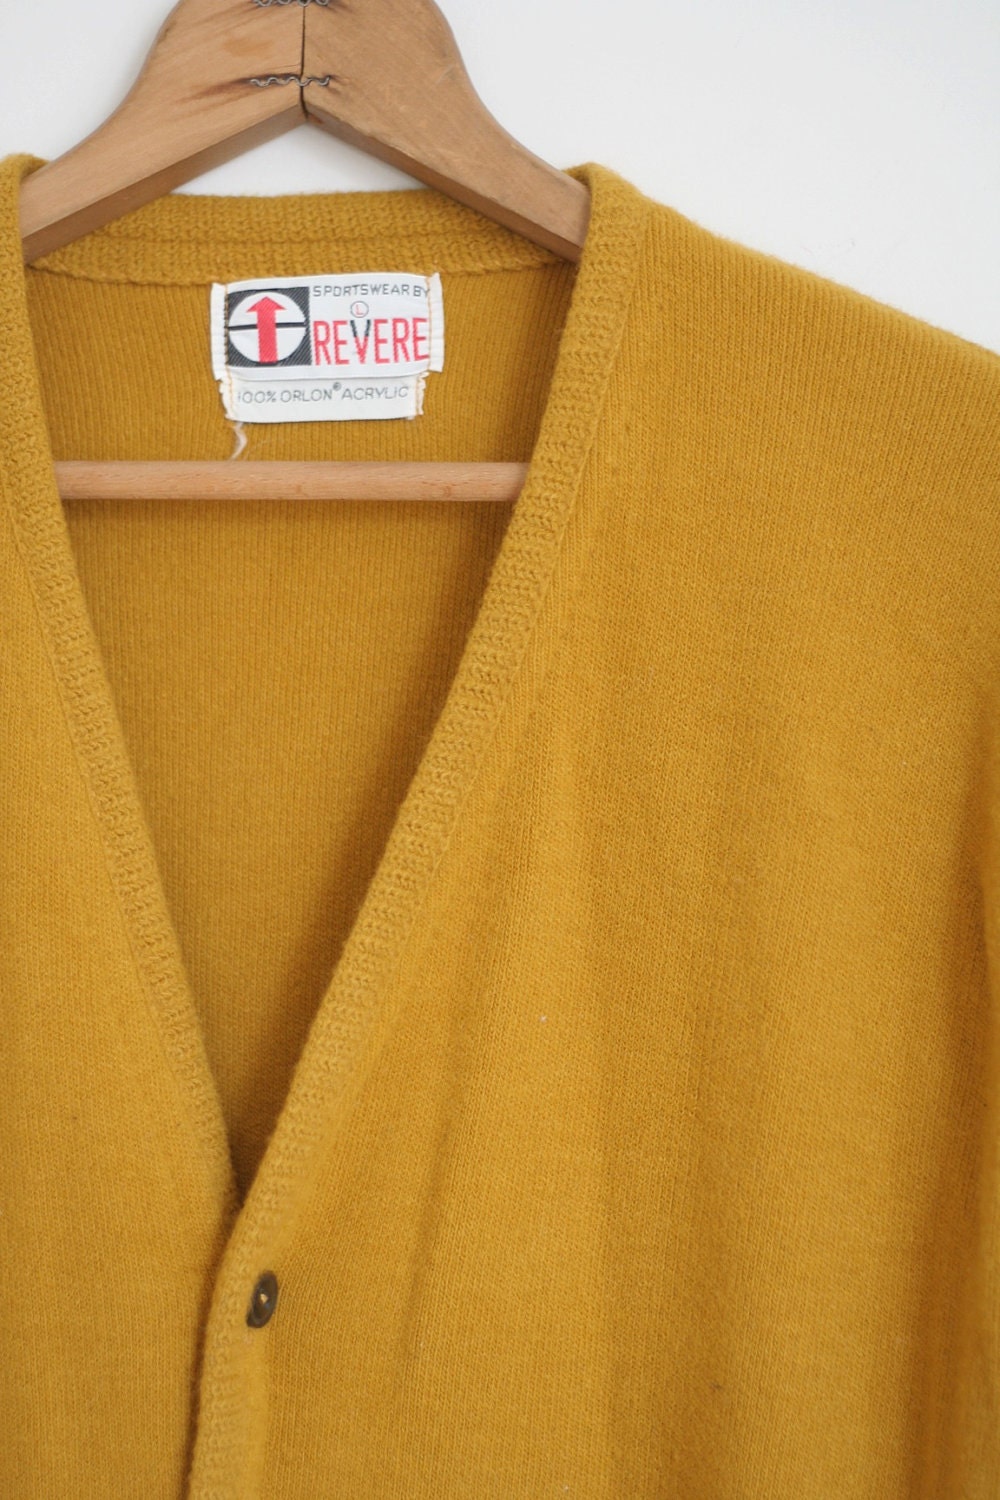 Yellow Mustard Sweater Oversize Cardigan Vintage 70s 80s M L